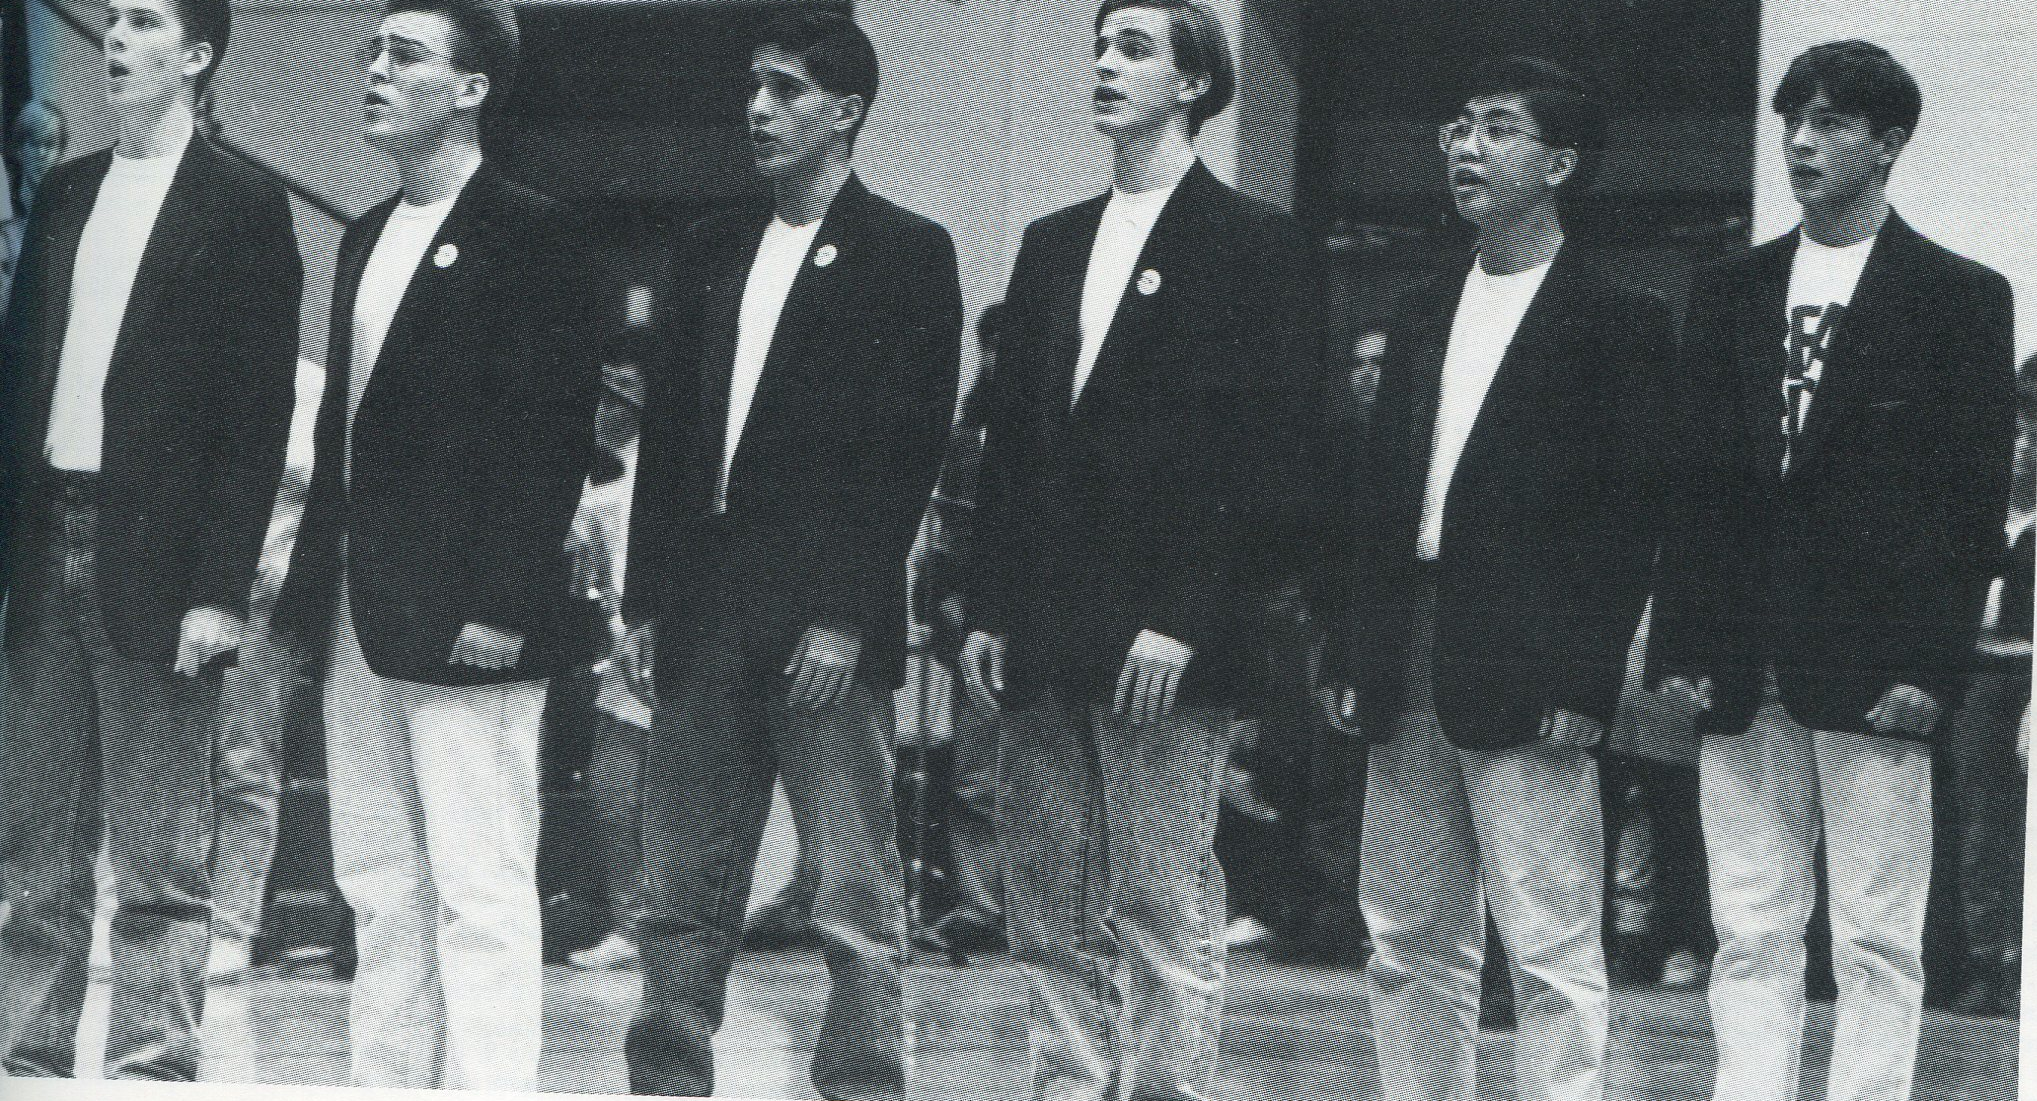 1991 Choir Performance at Basketball Game